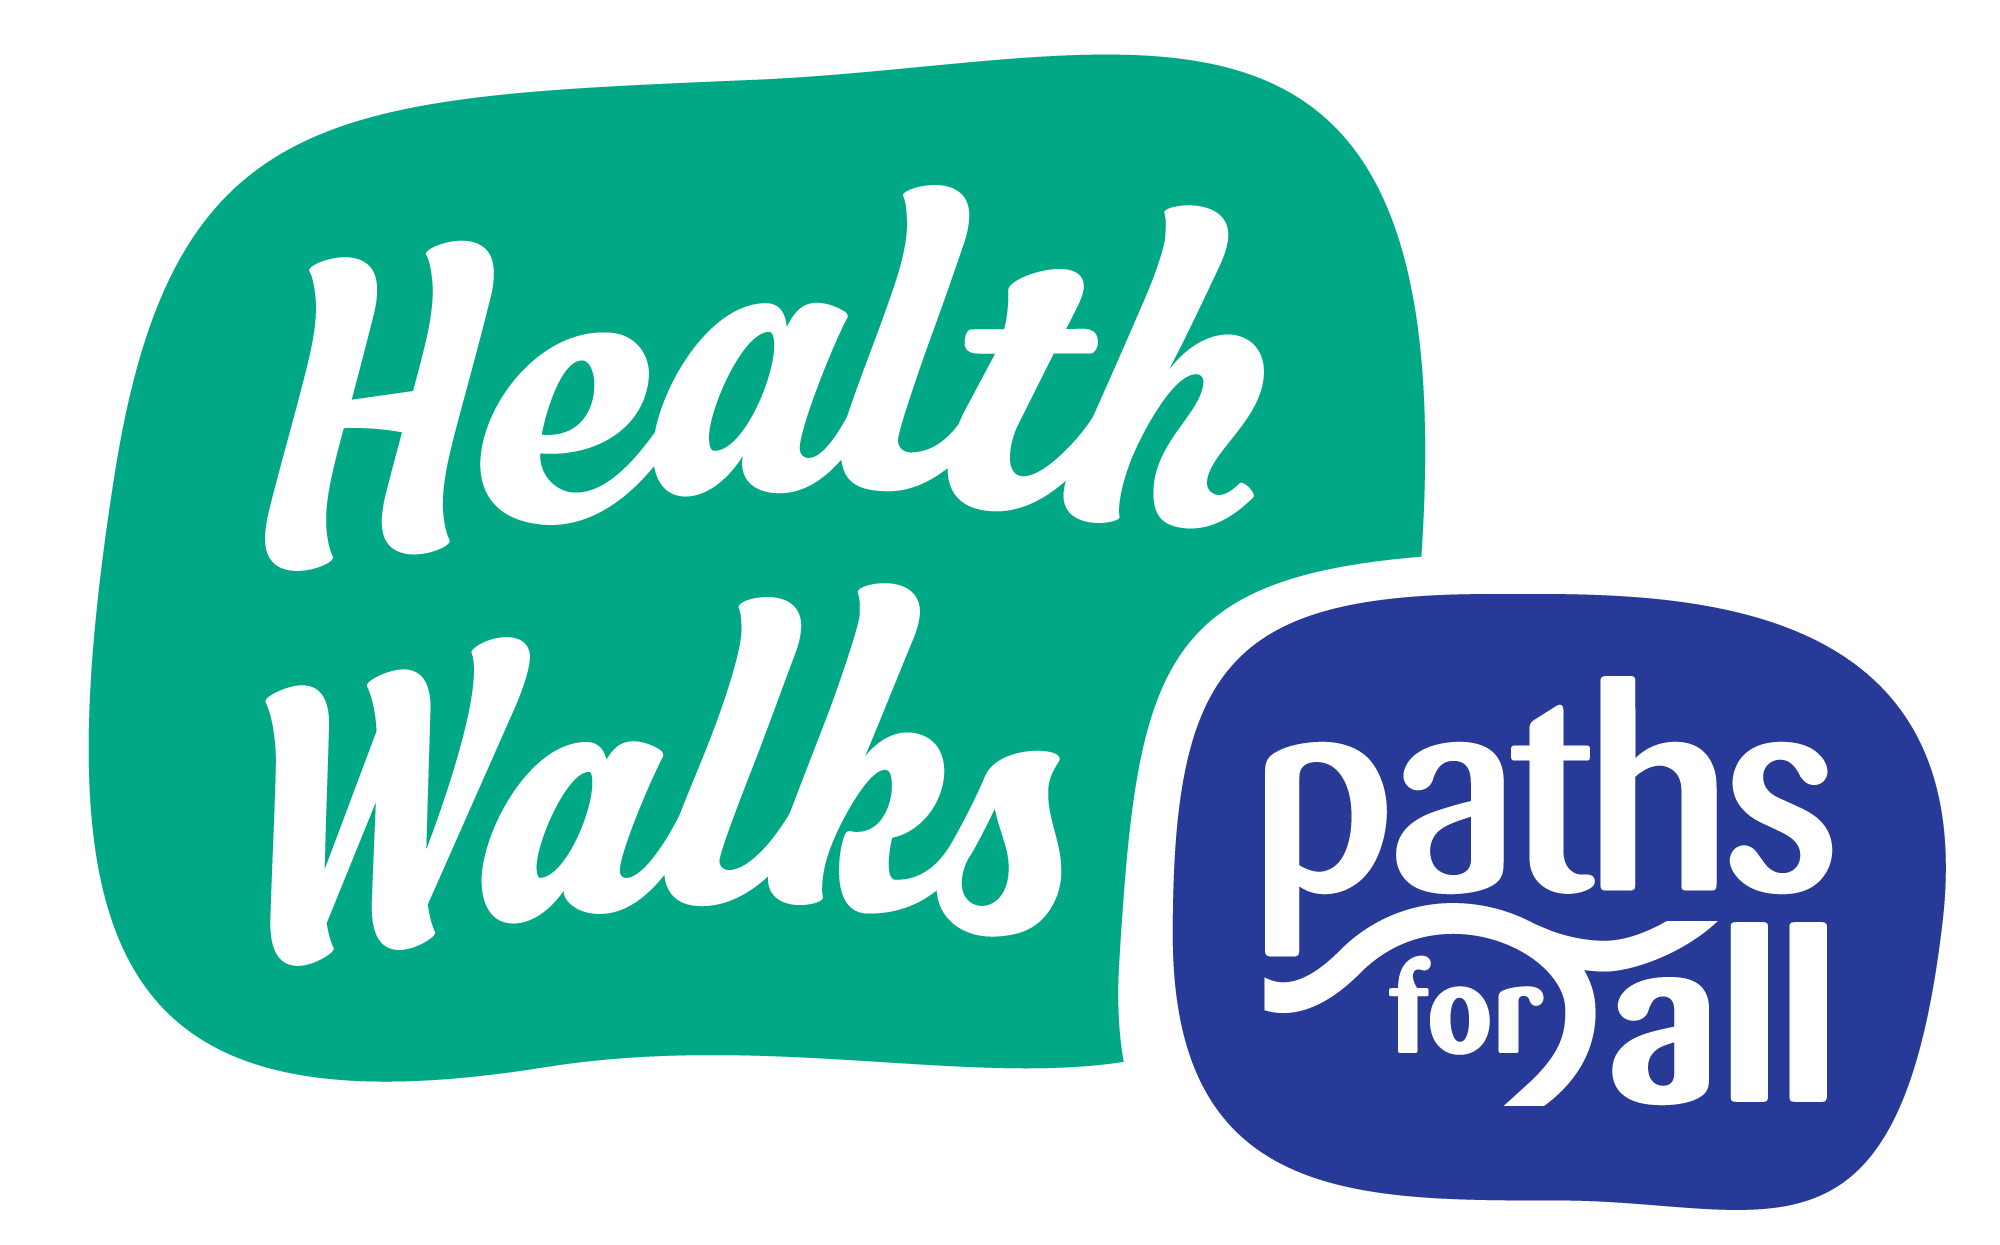 Paths for all, Health Walks logo